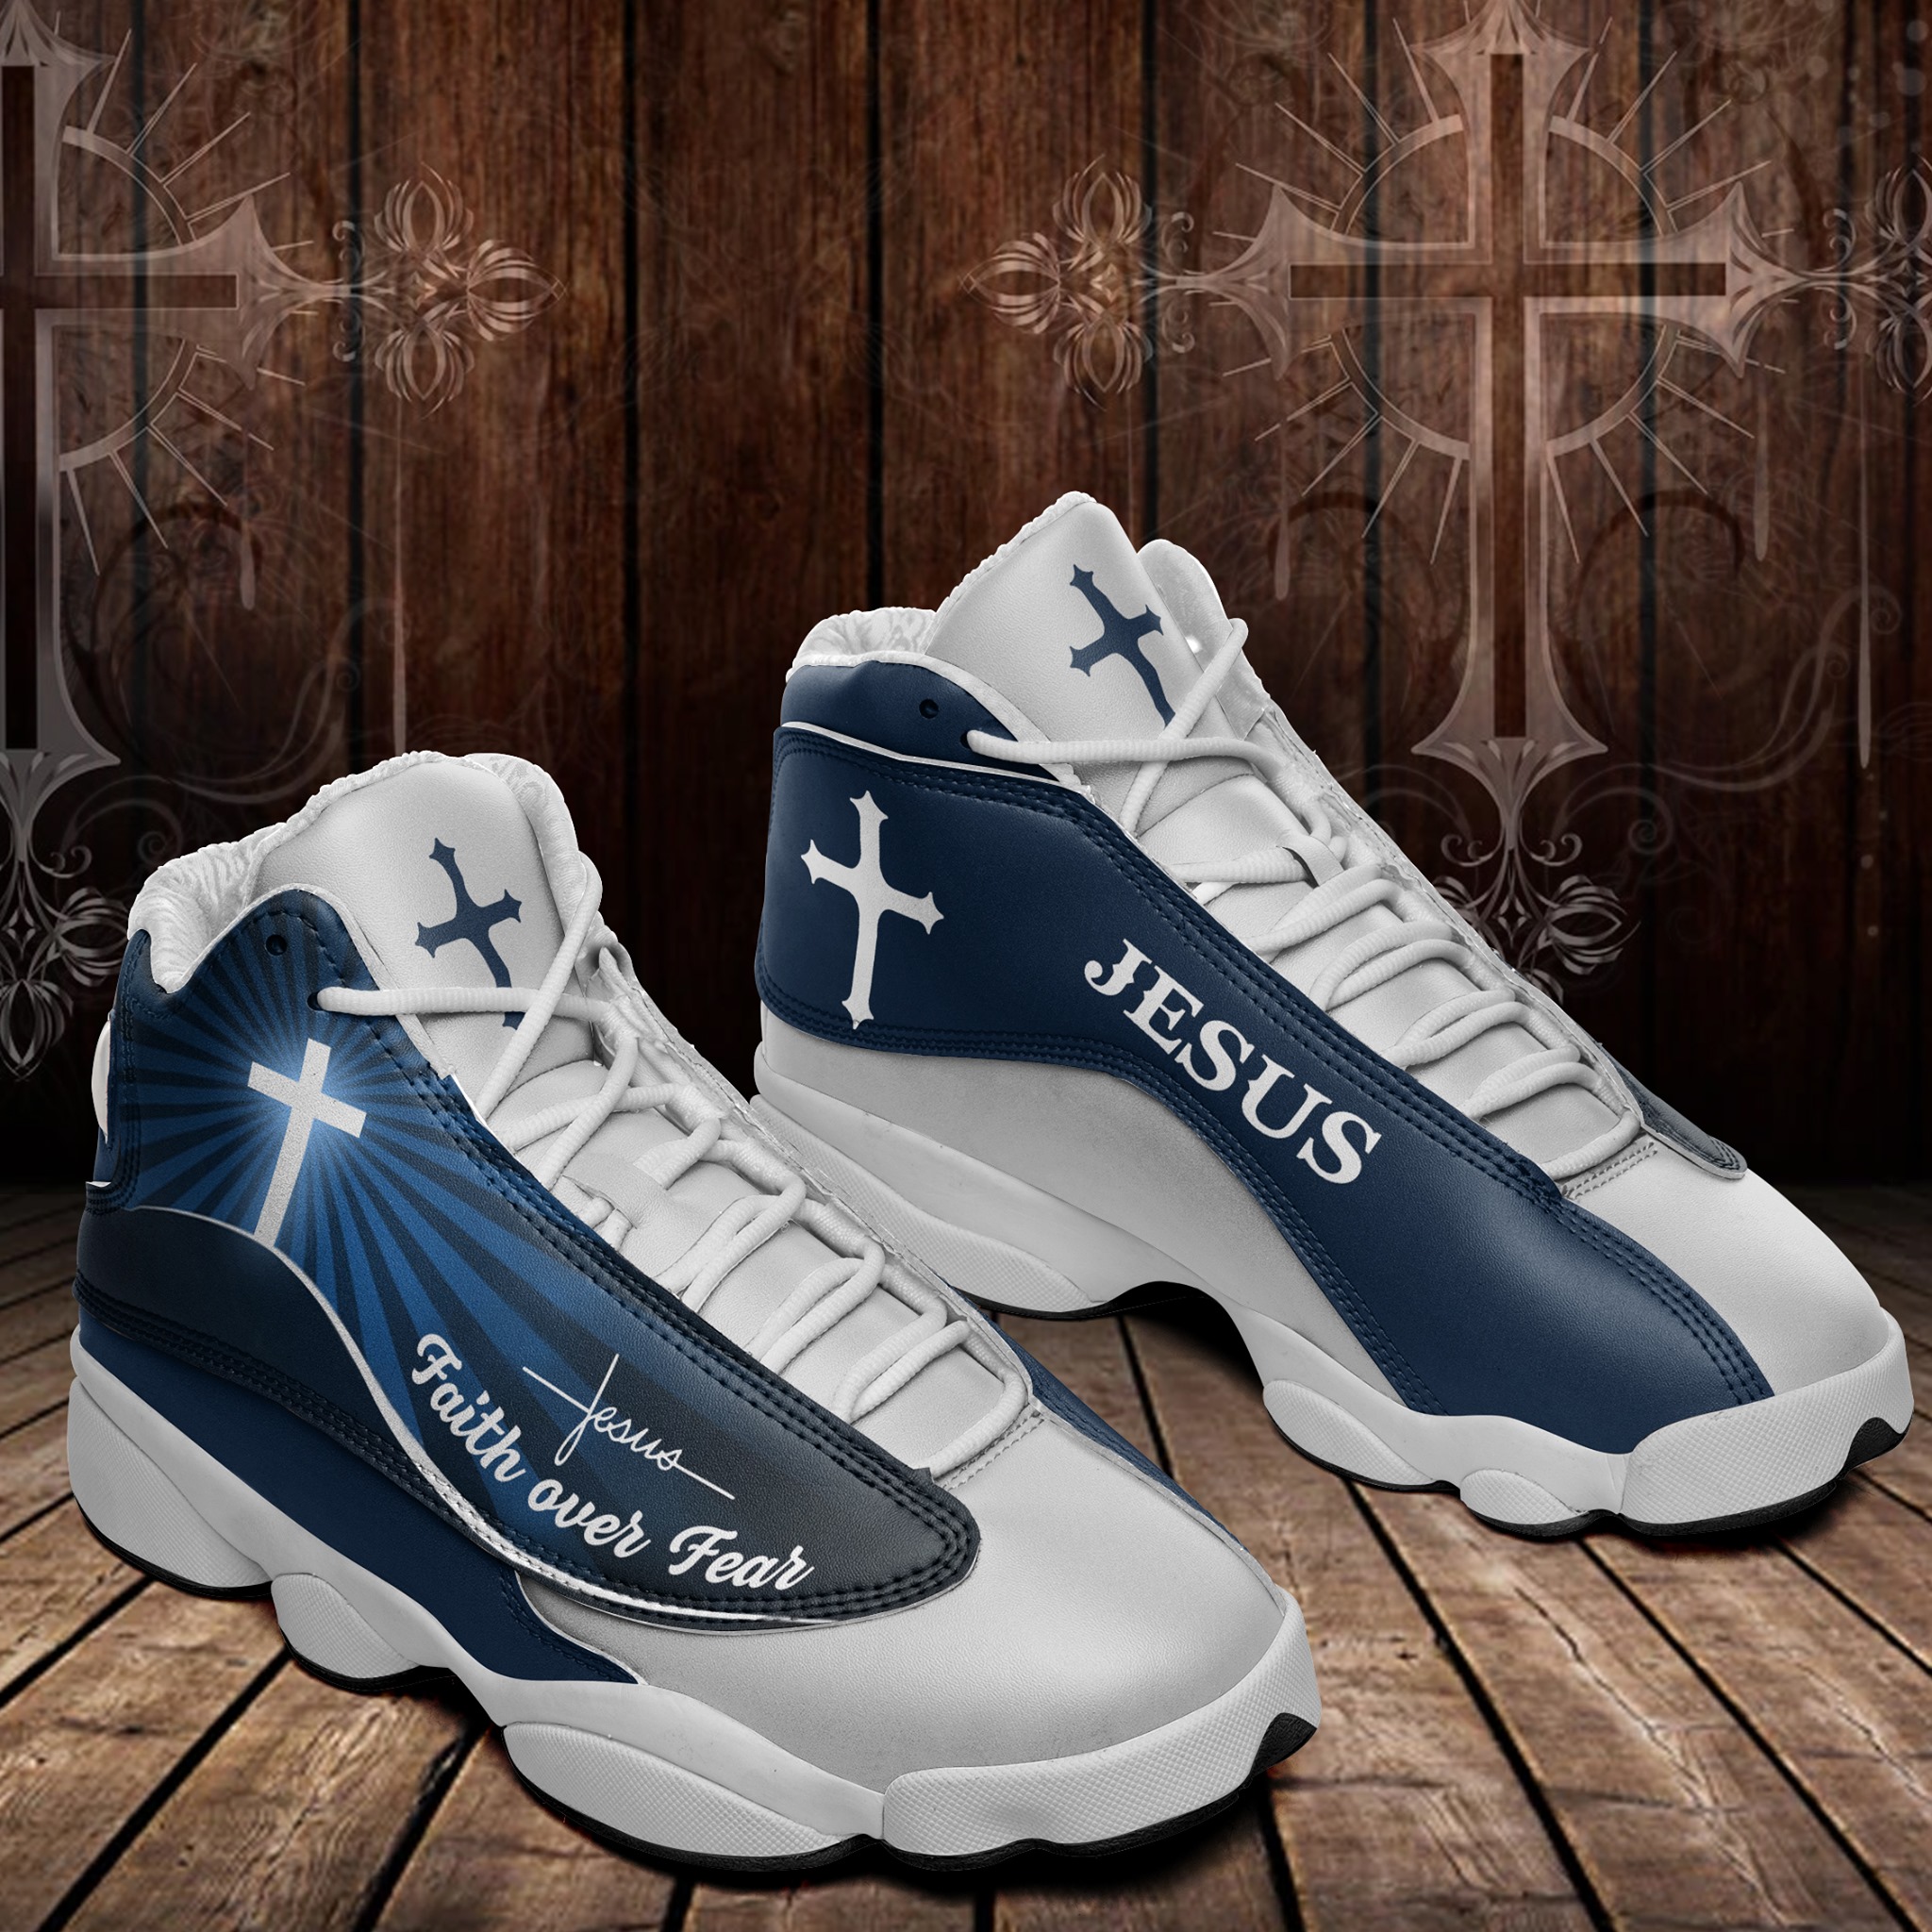 Jesus Faith over fear air jordan 13 sneakers – LIMITED EDTION